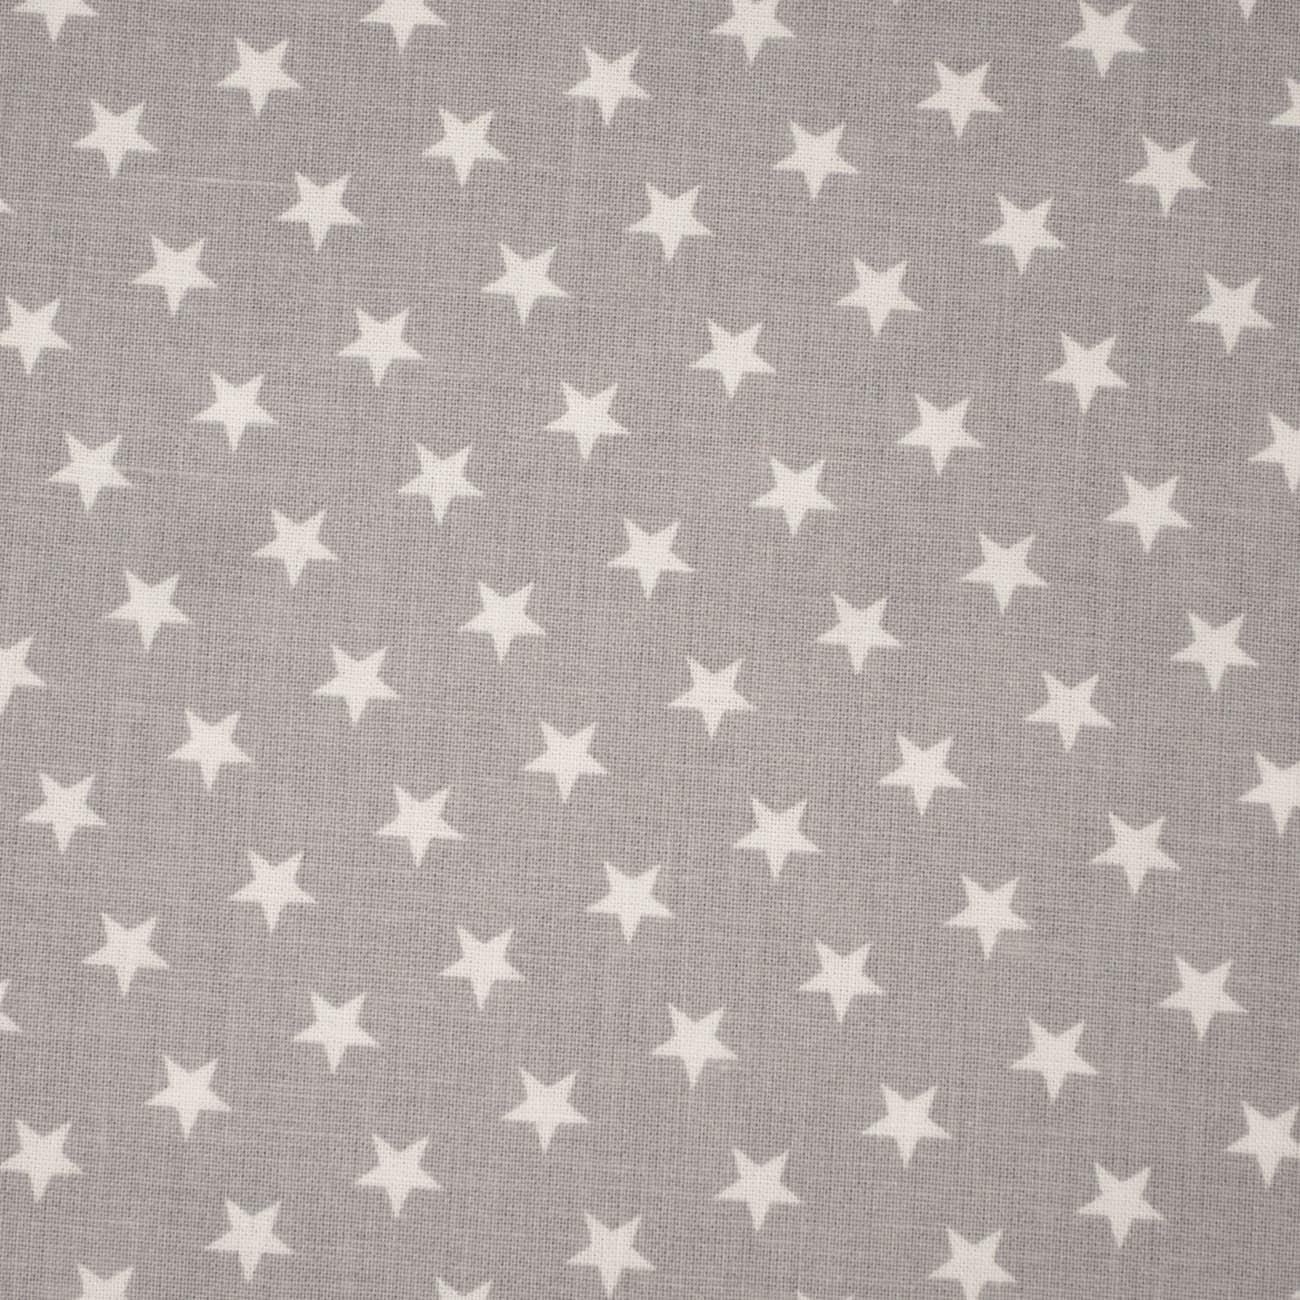 WHITE STARS / grey - Cotton woven fabric